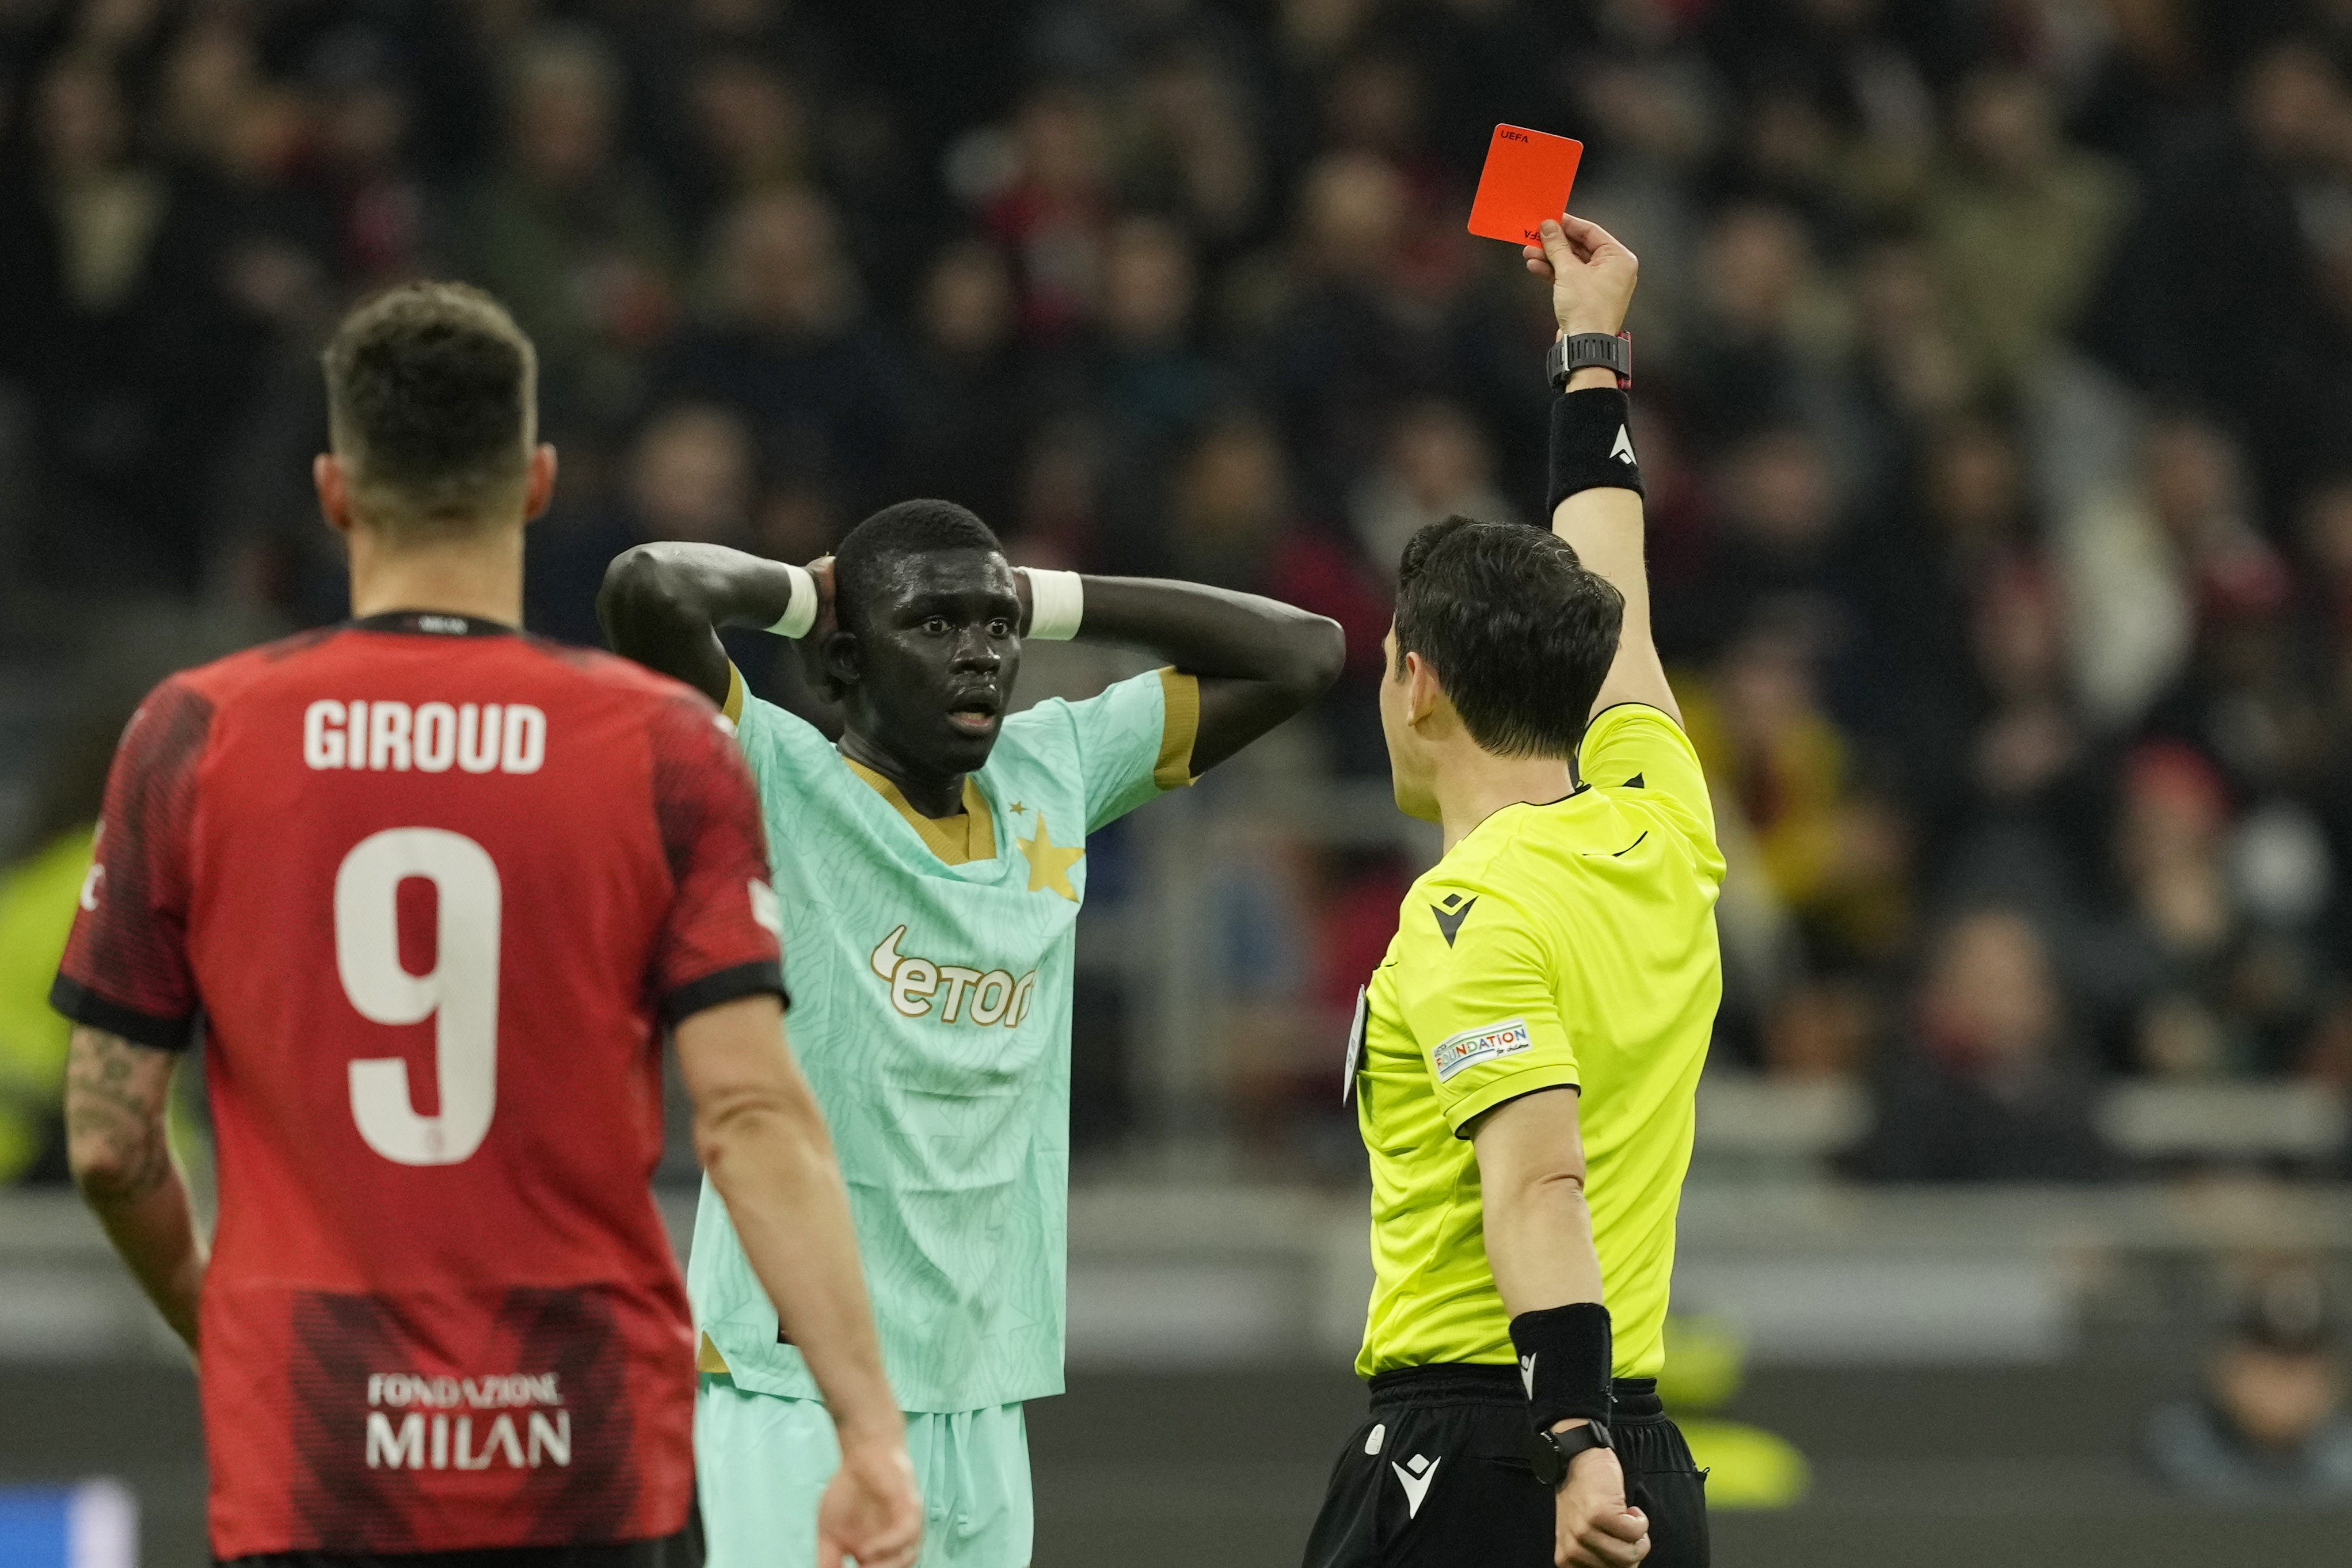 Slavia’s El Hadji Malick Diouf receives a red card